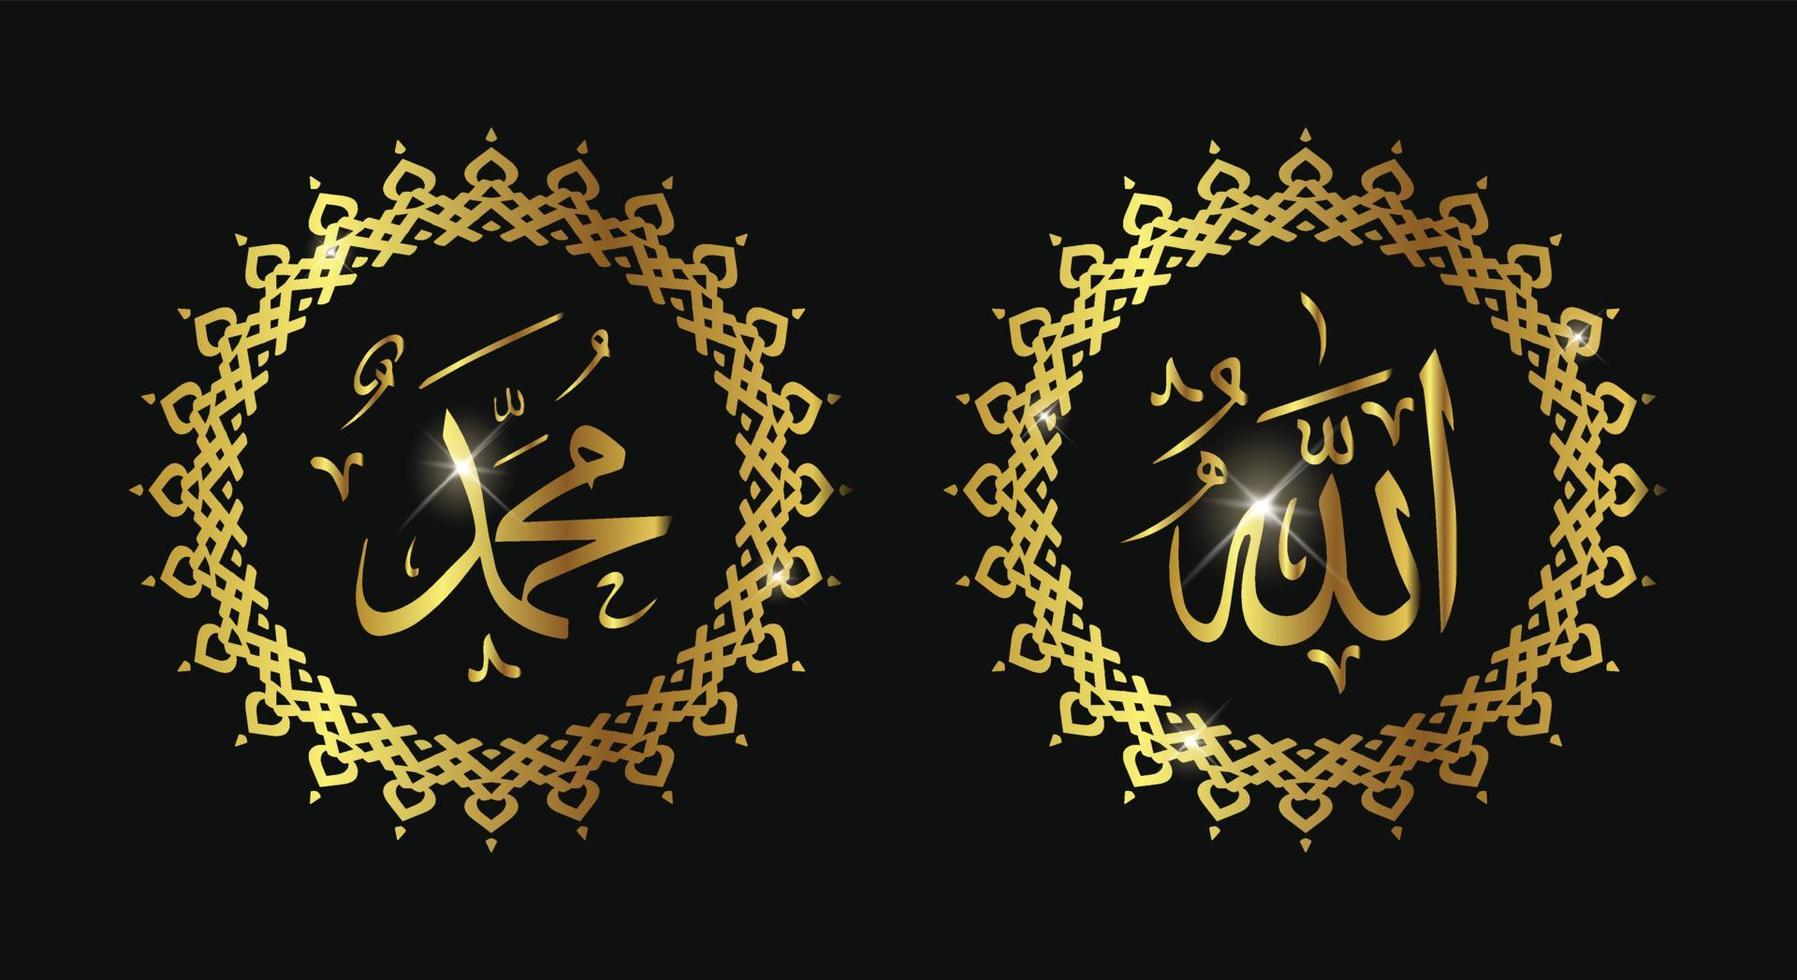 Allah Muhammad arabic calligraphy, Islamic wall art decoration vector